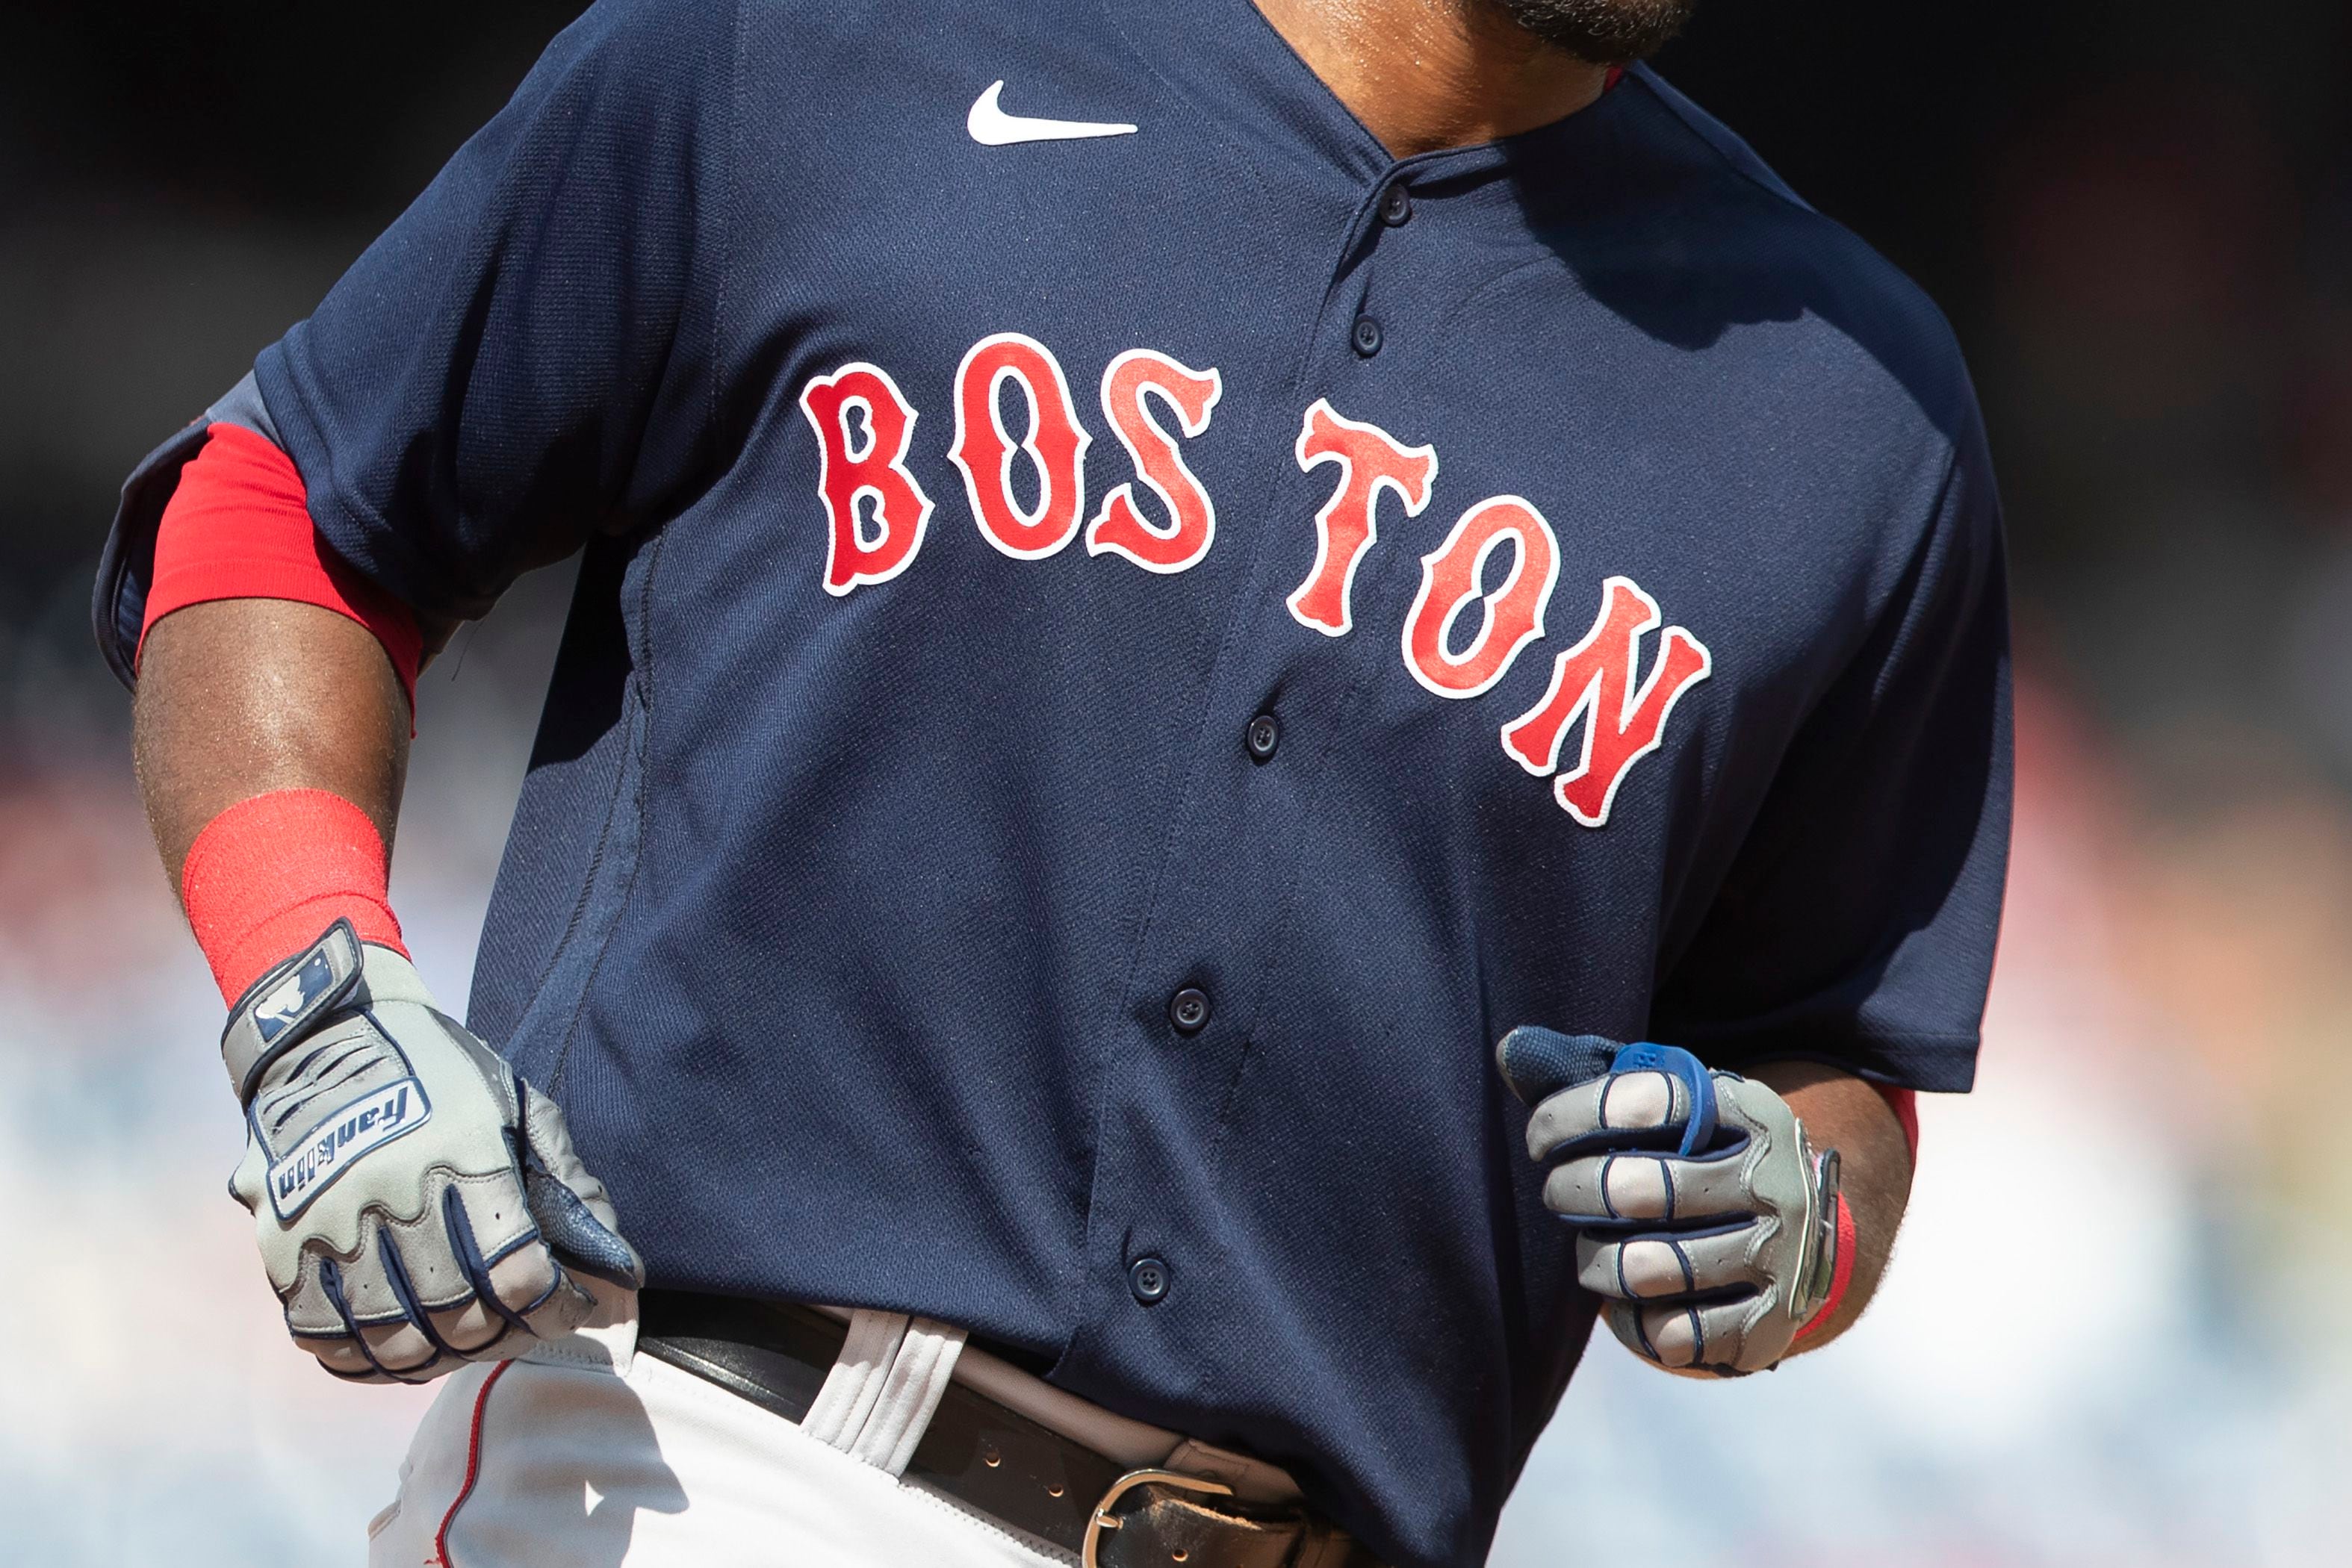 Red Sox to mark 10-year anniversary of Boston Marathon Bombing